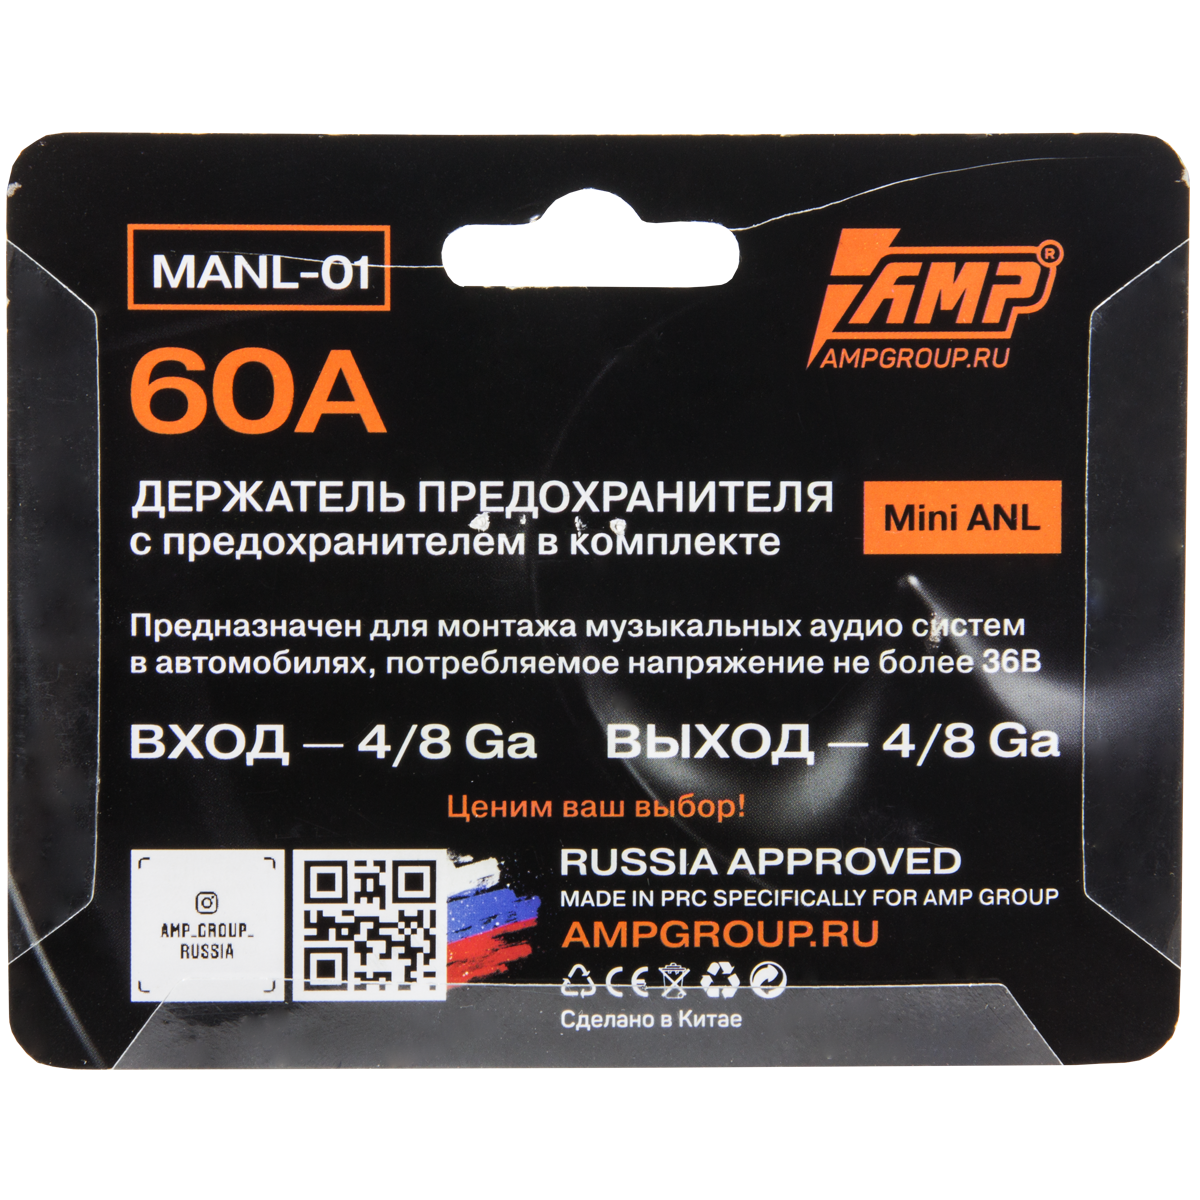 Amp AMP MANL-01  60A 